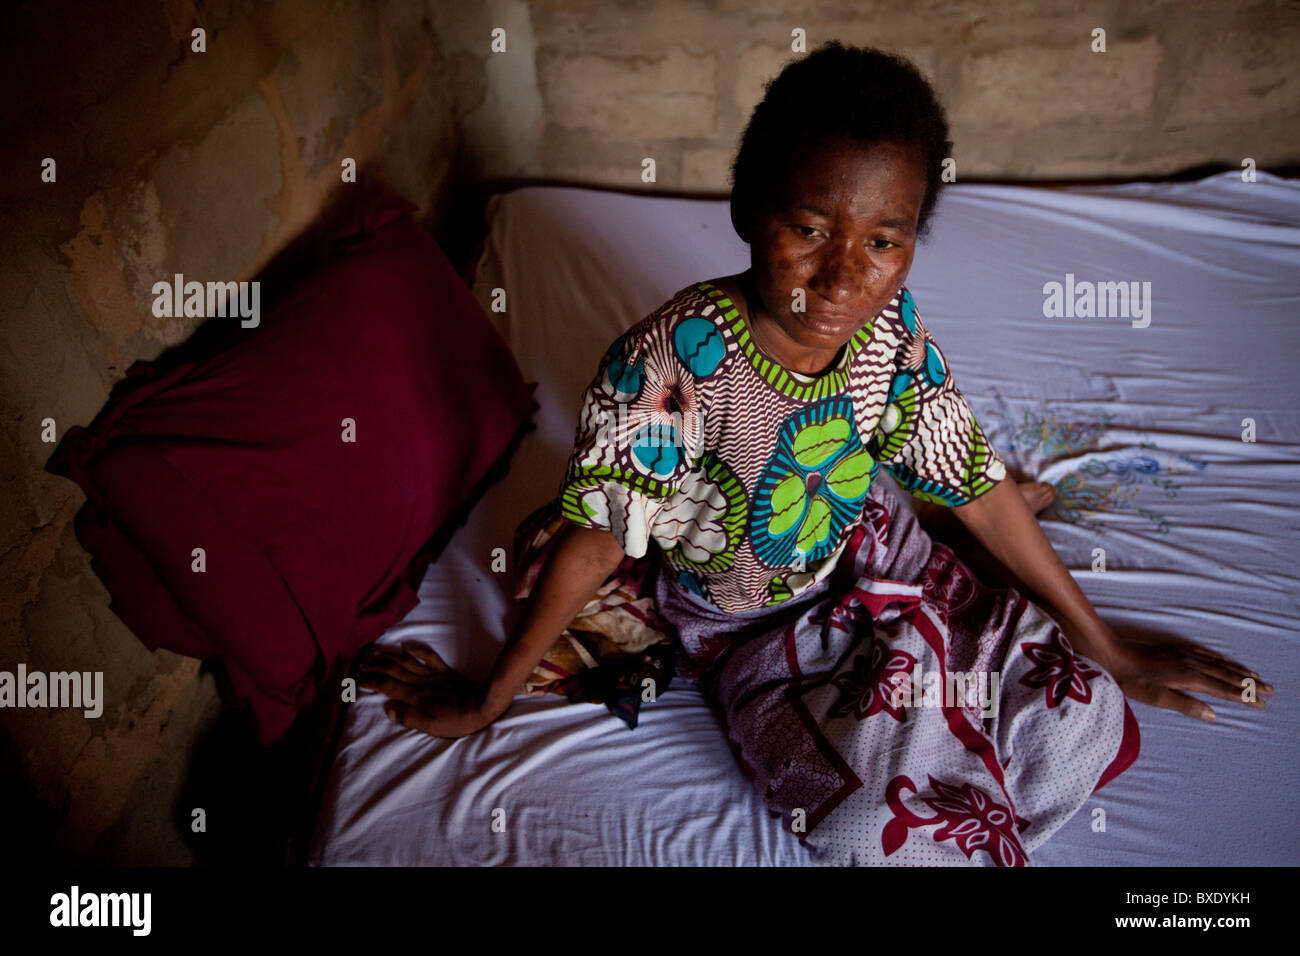 Frau Asha Mahammed (38), eine Frau Tuberkulosekranke, sitzt in ihrem Bett in Dar Es Salaam, Tansania, Ostafrika. Stockfoto